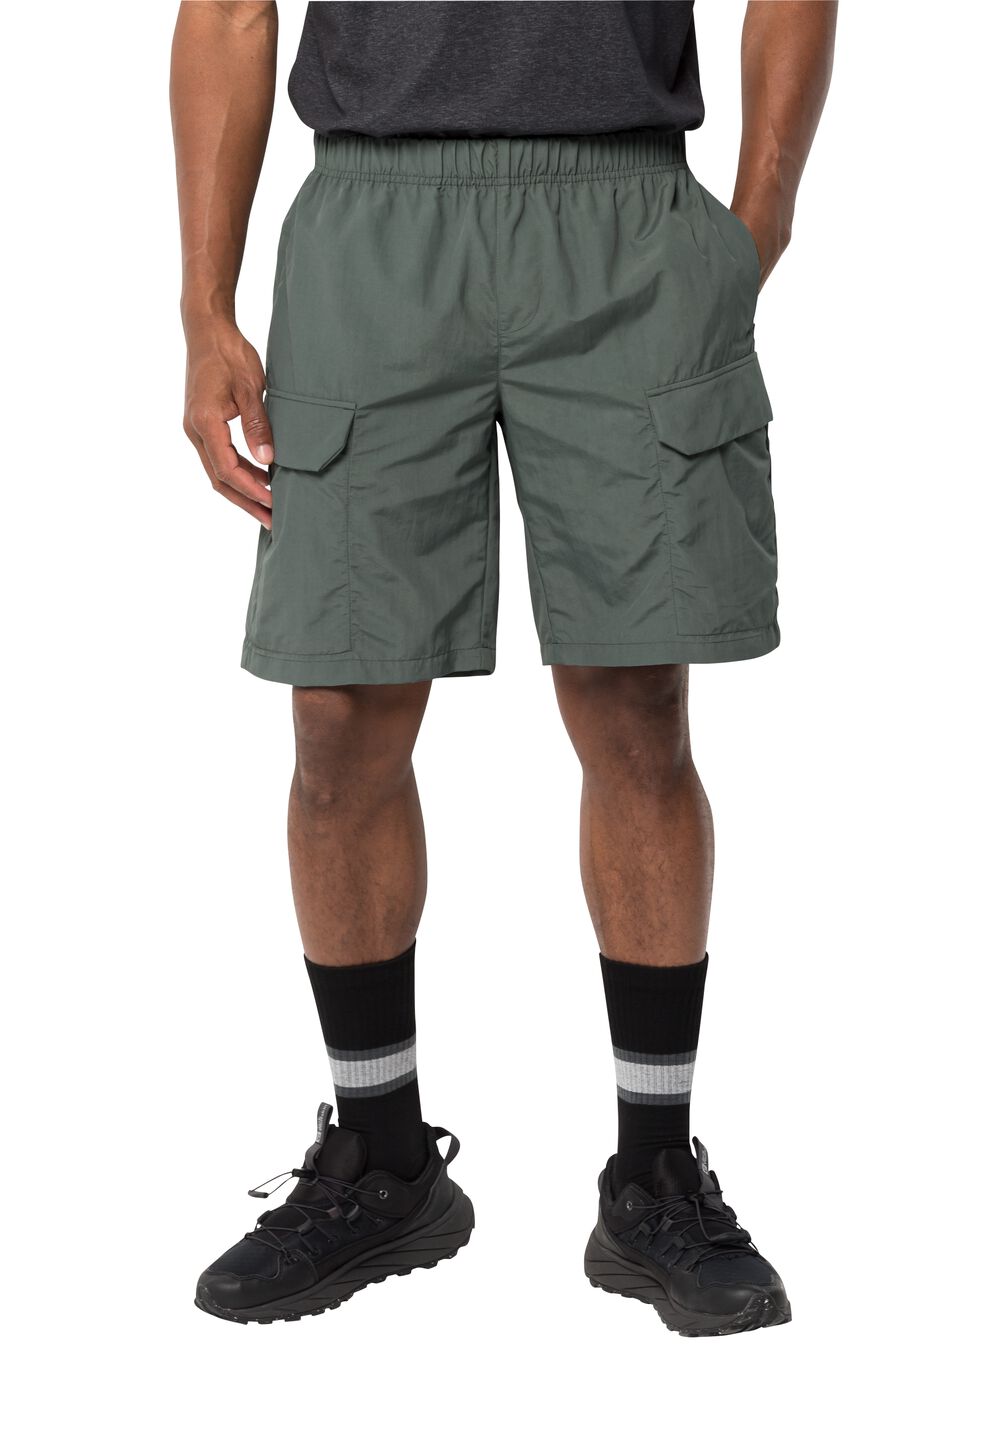 Jack Wolfskin Konstabler Shorts Kurze Hose Unisex XL grau slate green 51